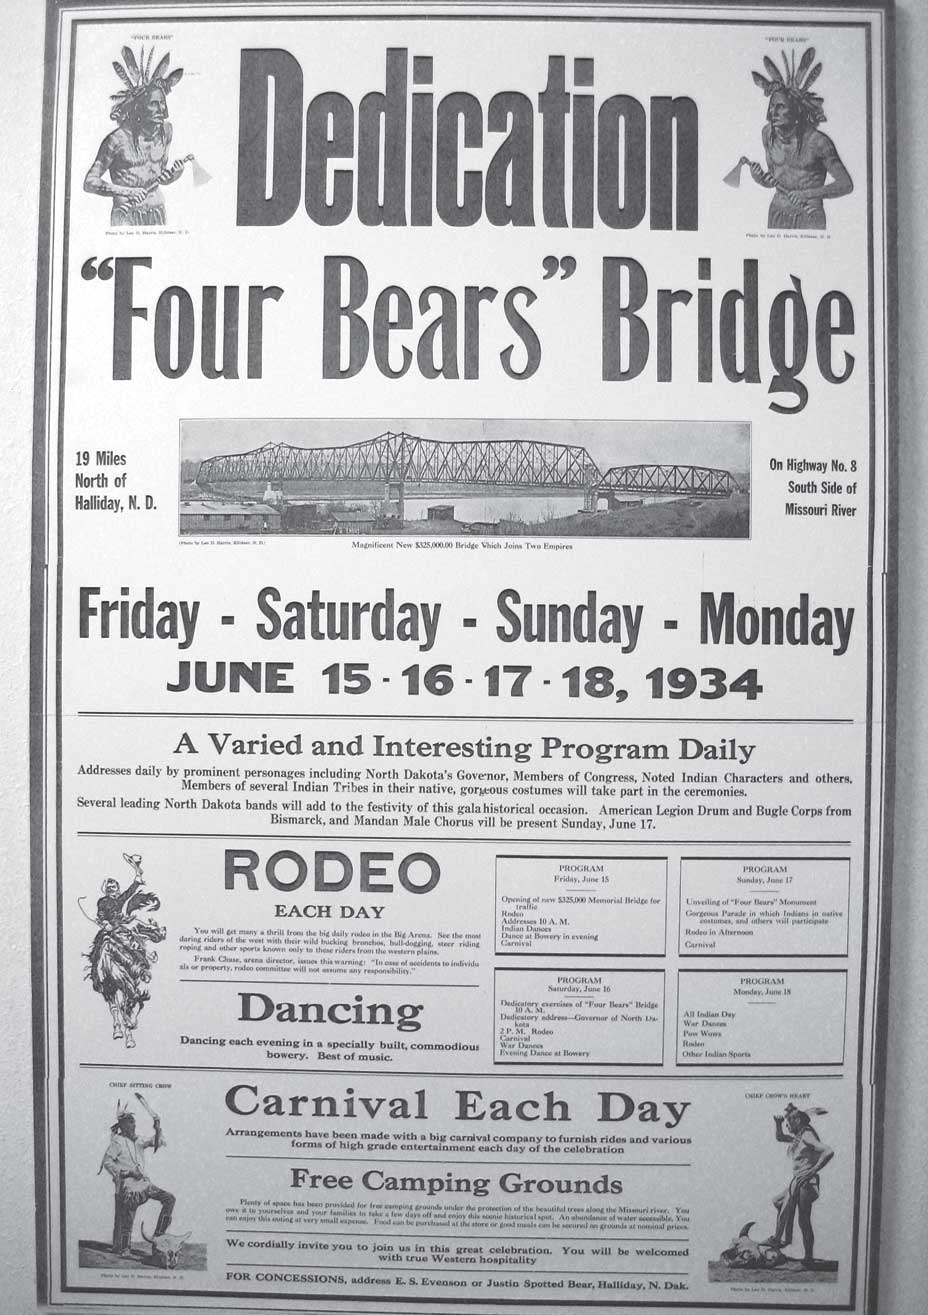 Dedication of the Four Bears Bridge.